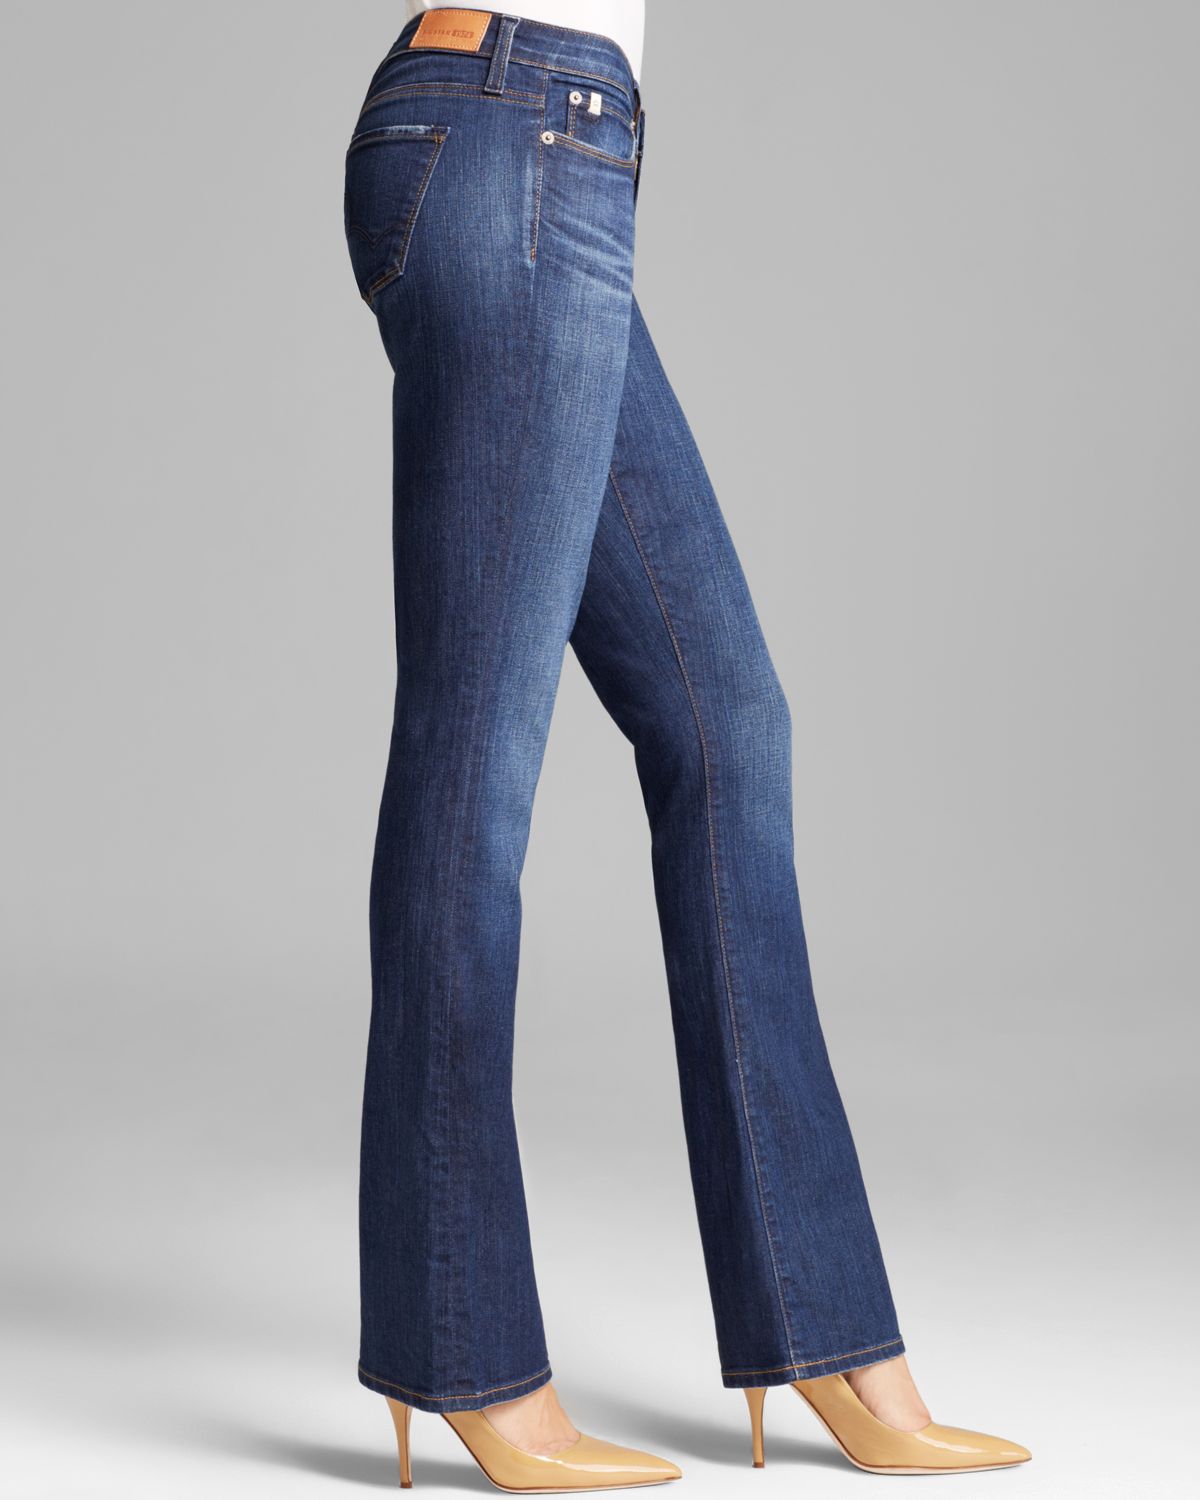 Big Star Jeans Sarah Slim Bootcut in Burlington in Blue - Lyst